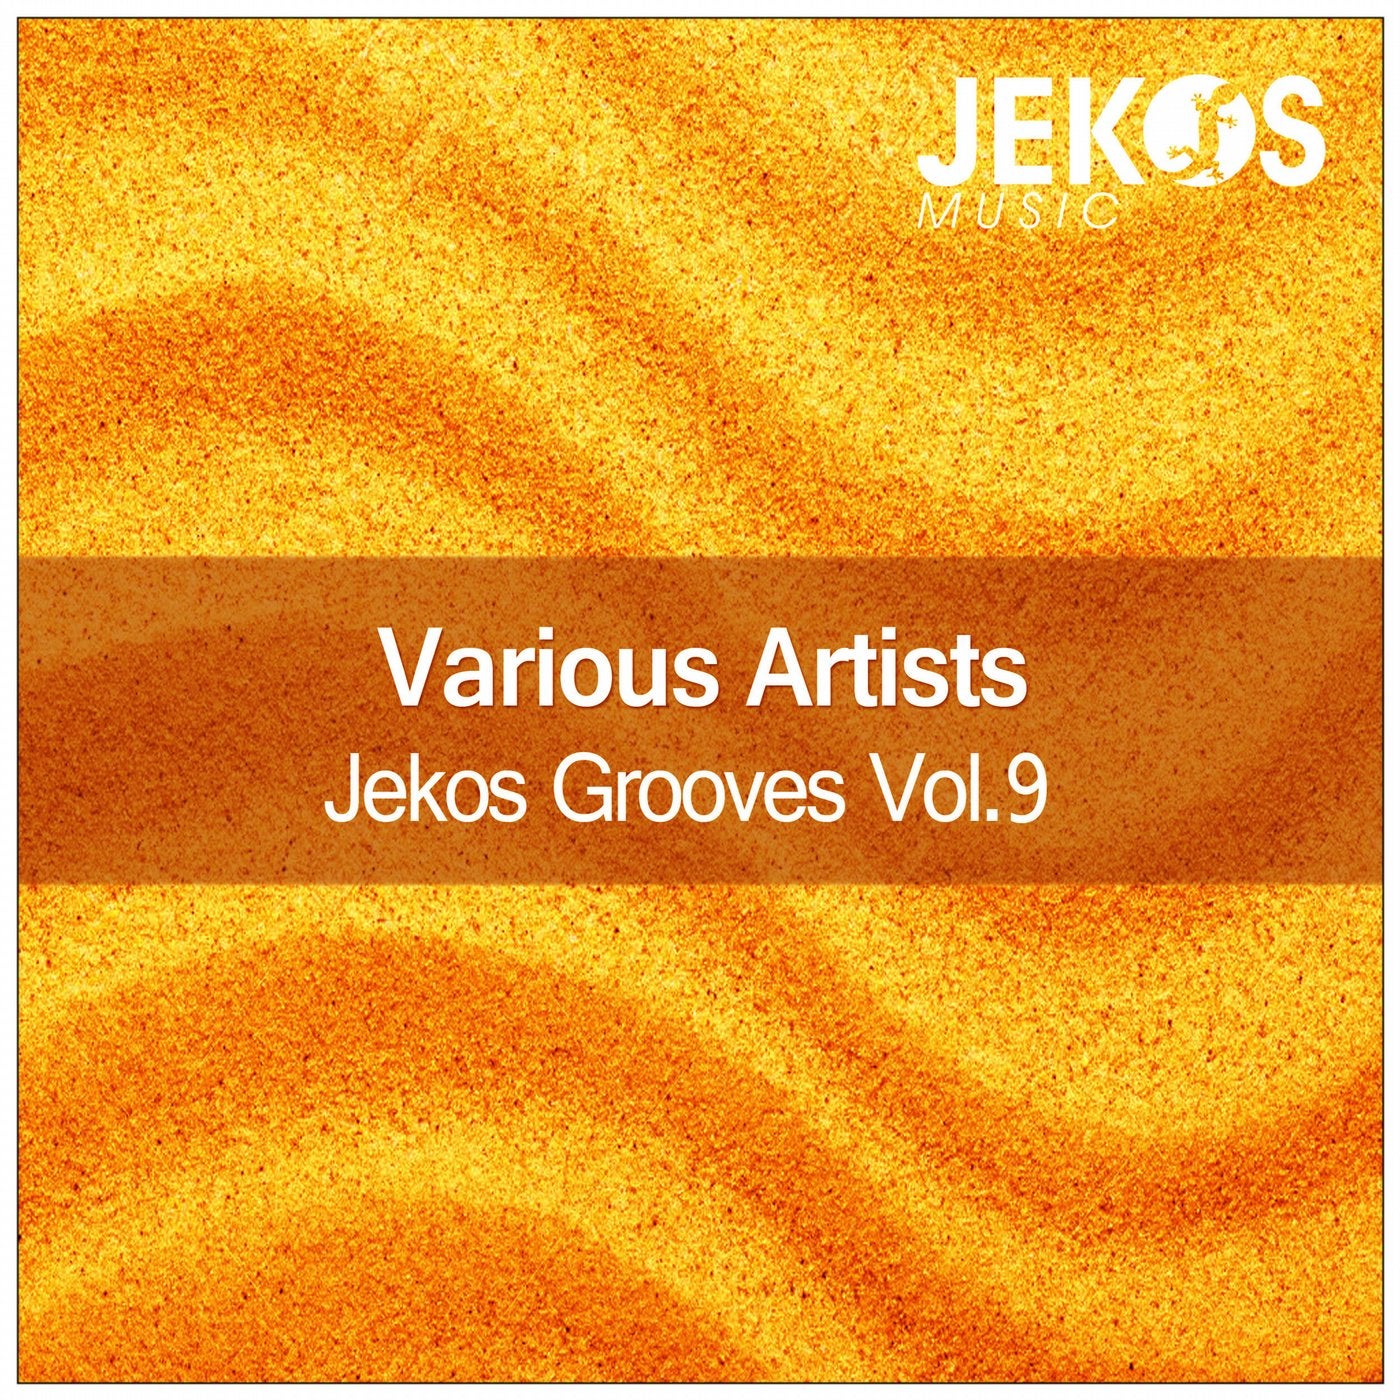 Jekos Grooves Vol.9